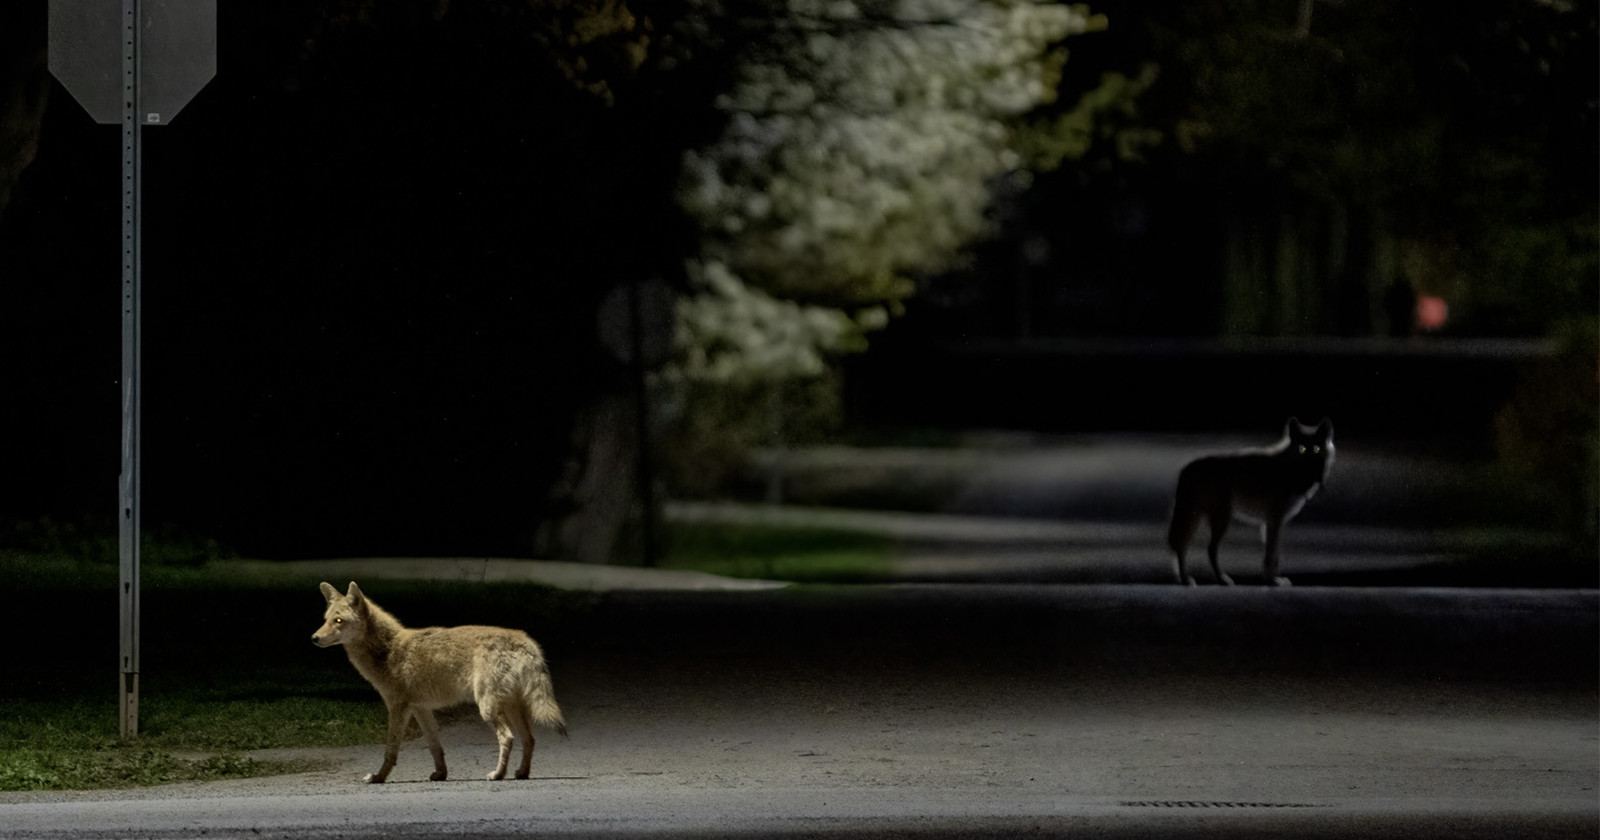 Coyotes Roaming the Streets of Ontario Wins Urban Wildlife Photo Awards